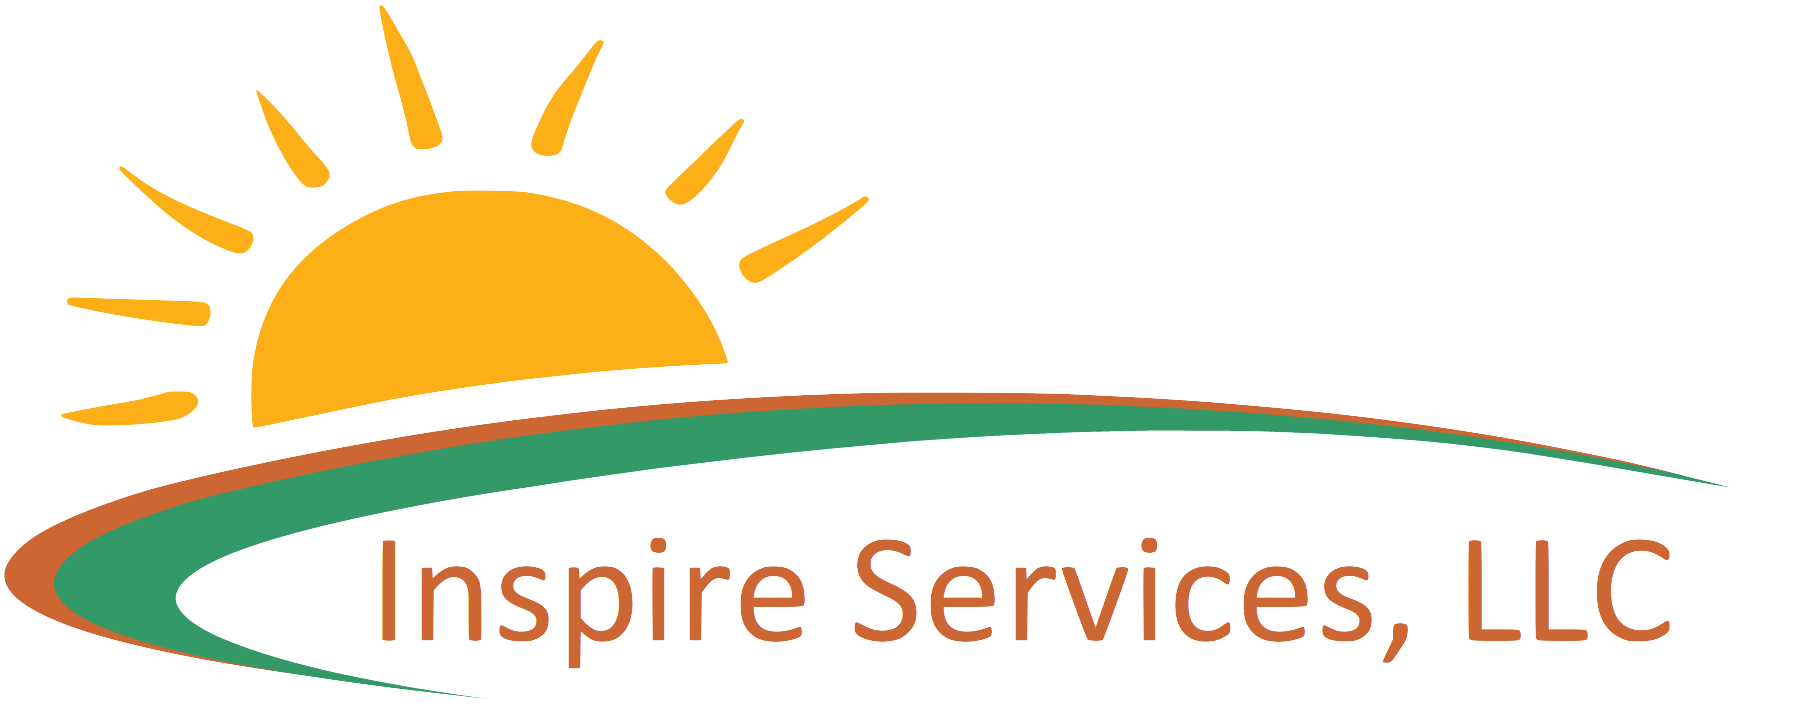 Inspire Services, LLC - San Pedro